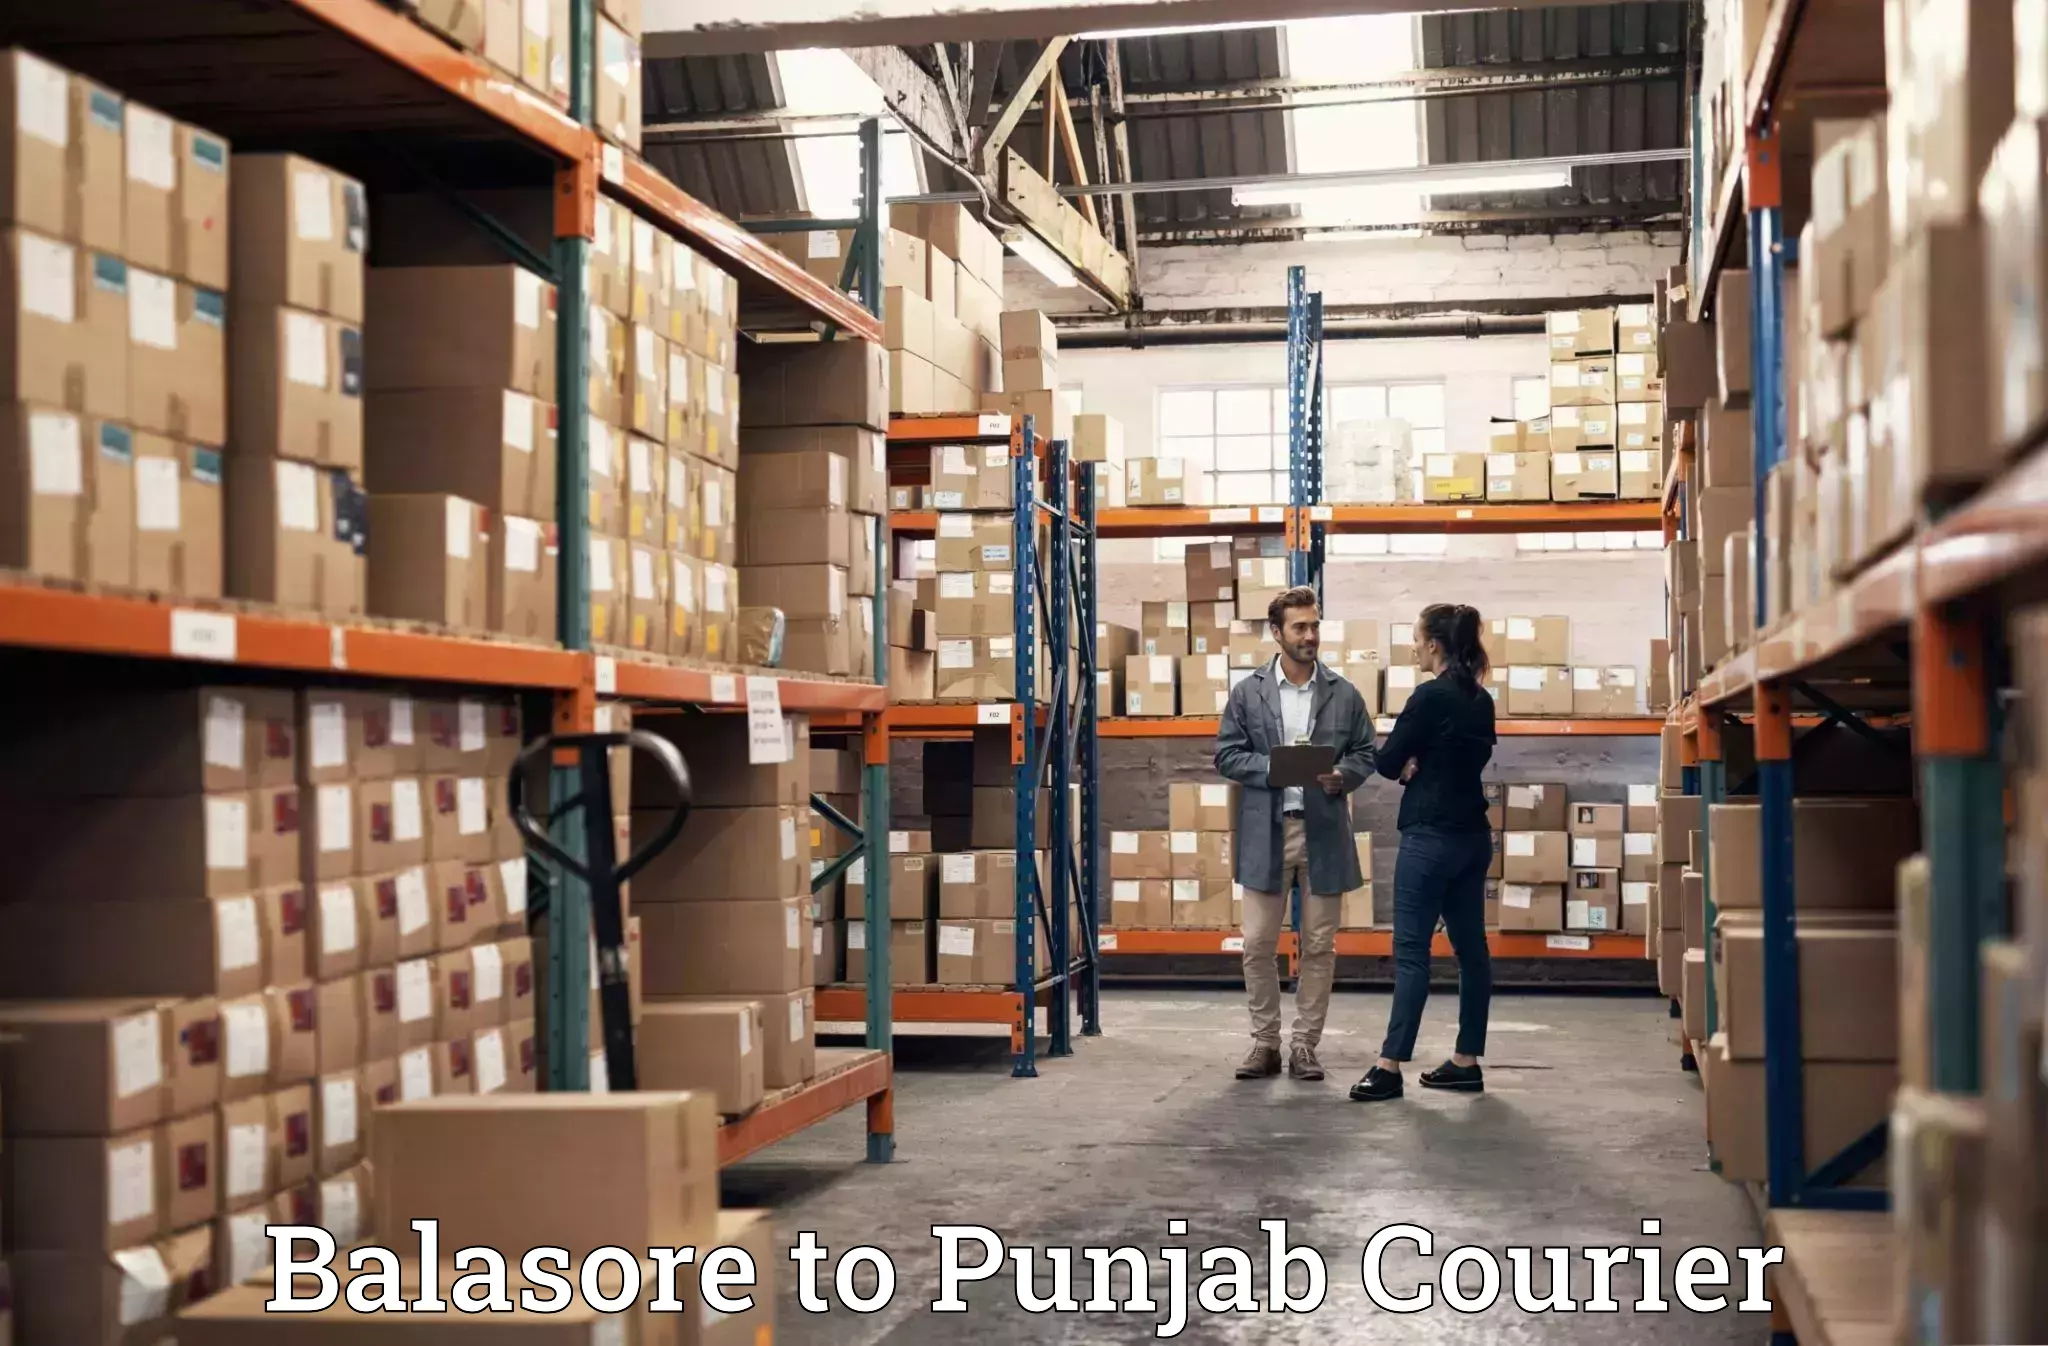 Furniture relocation experts Balasore to Amritsar